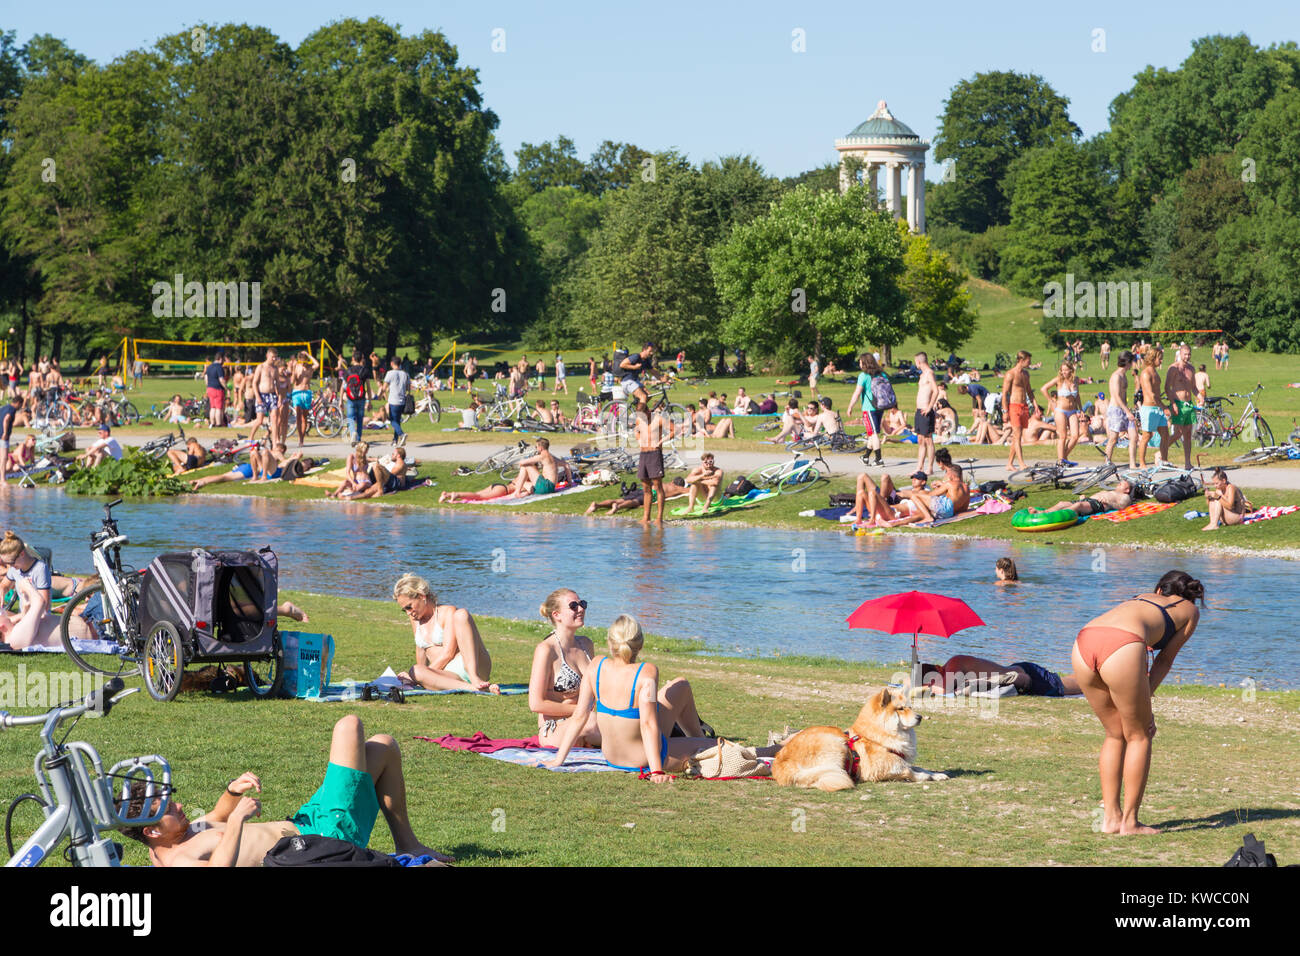 People enjoying the summer day in Englischer Garten city park in Munich, Germany. Stock Photo